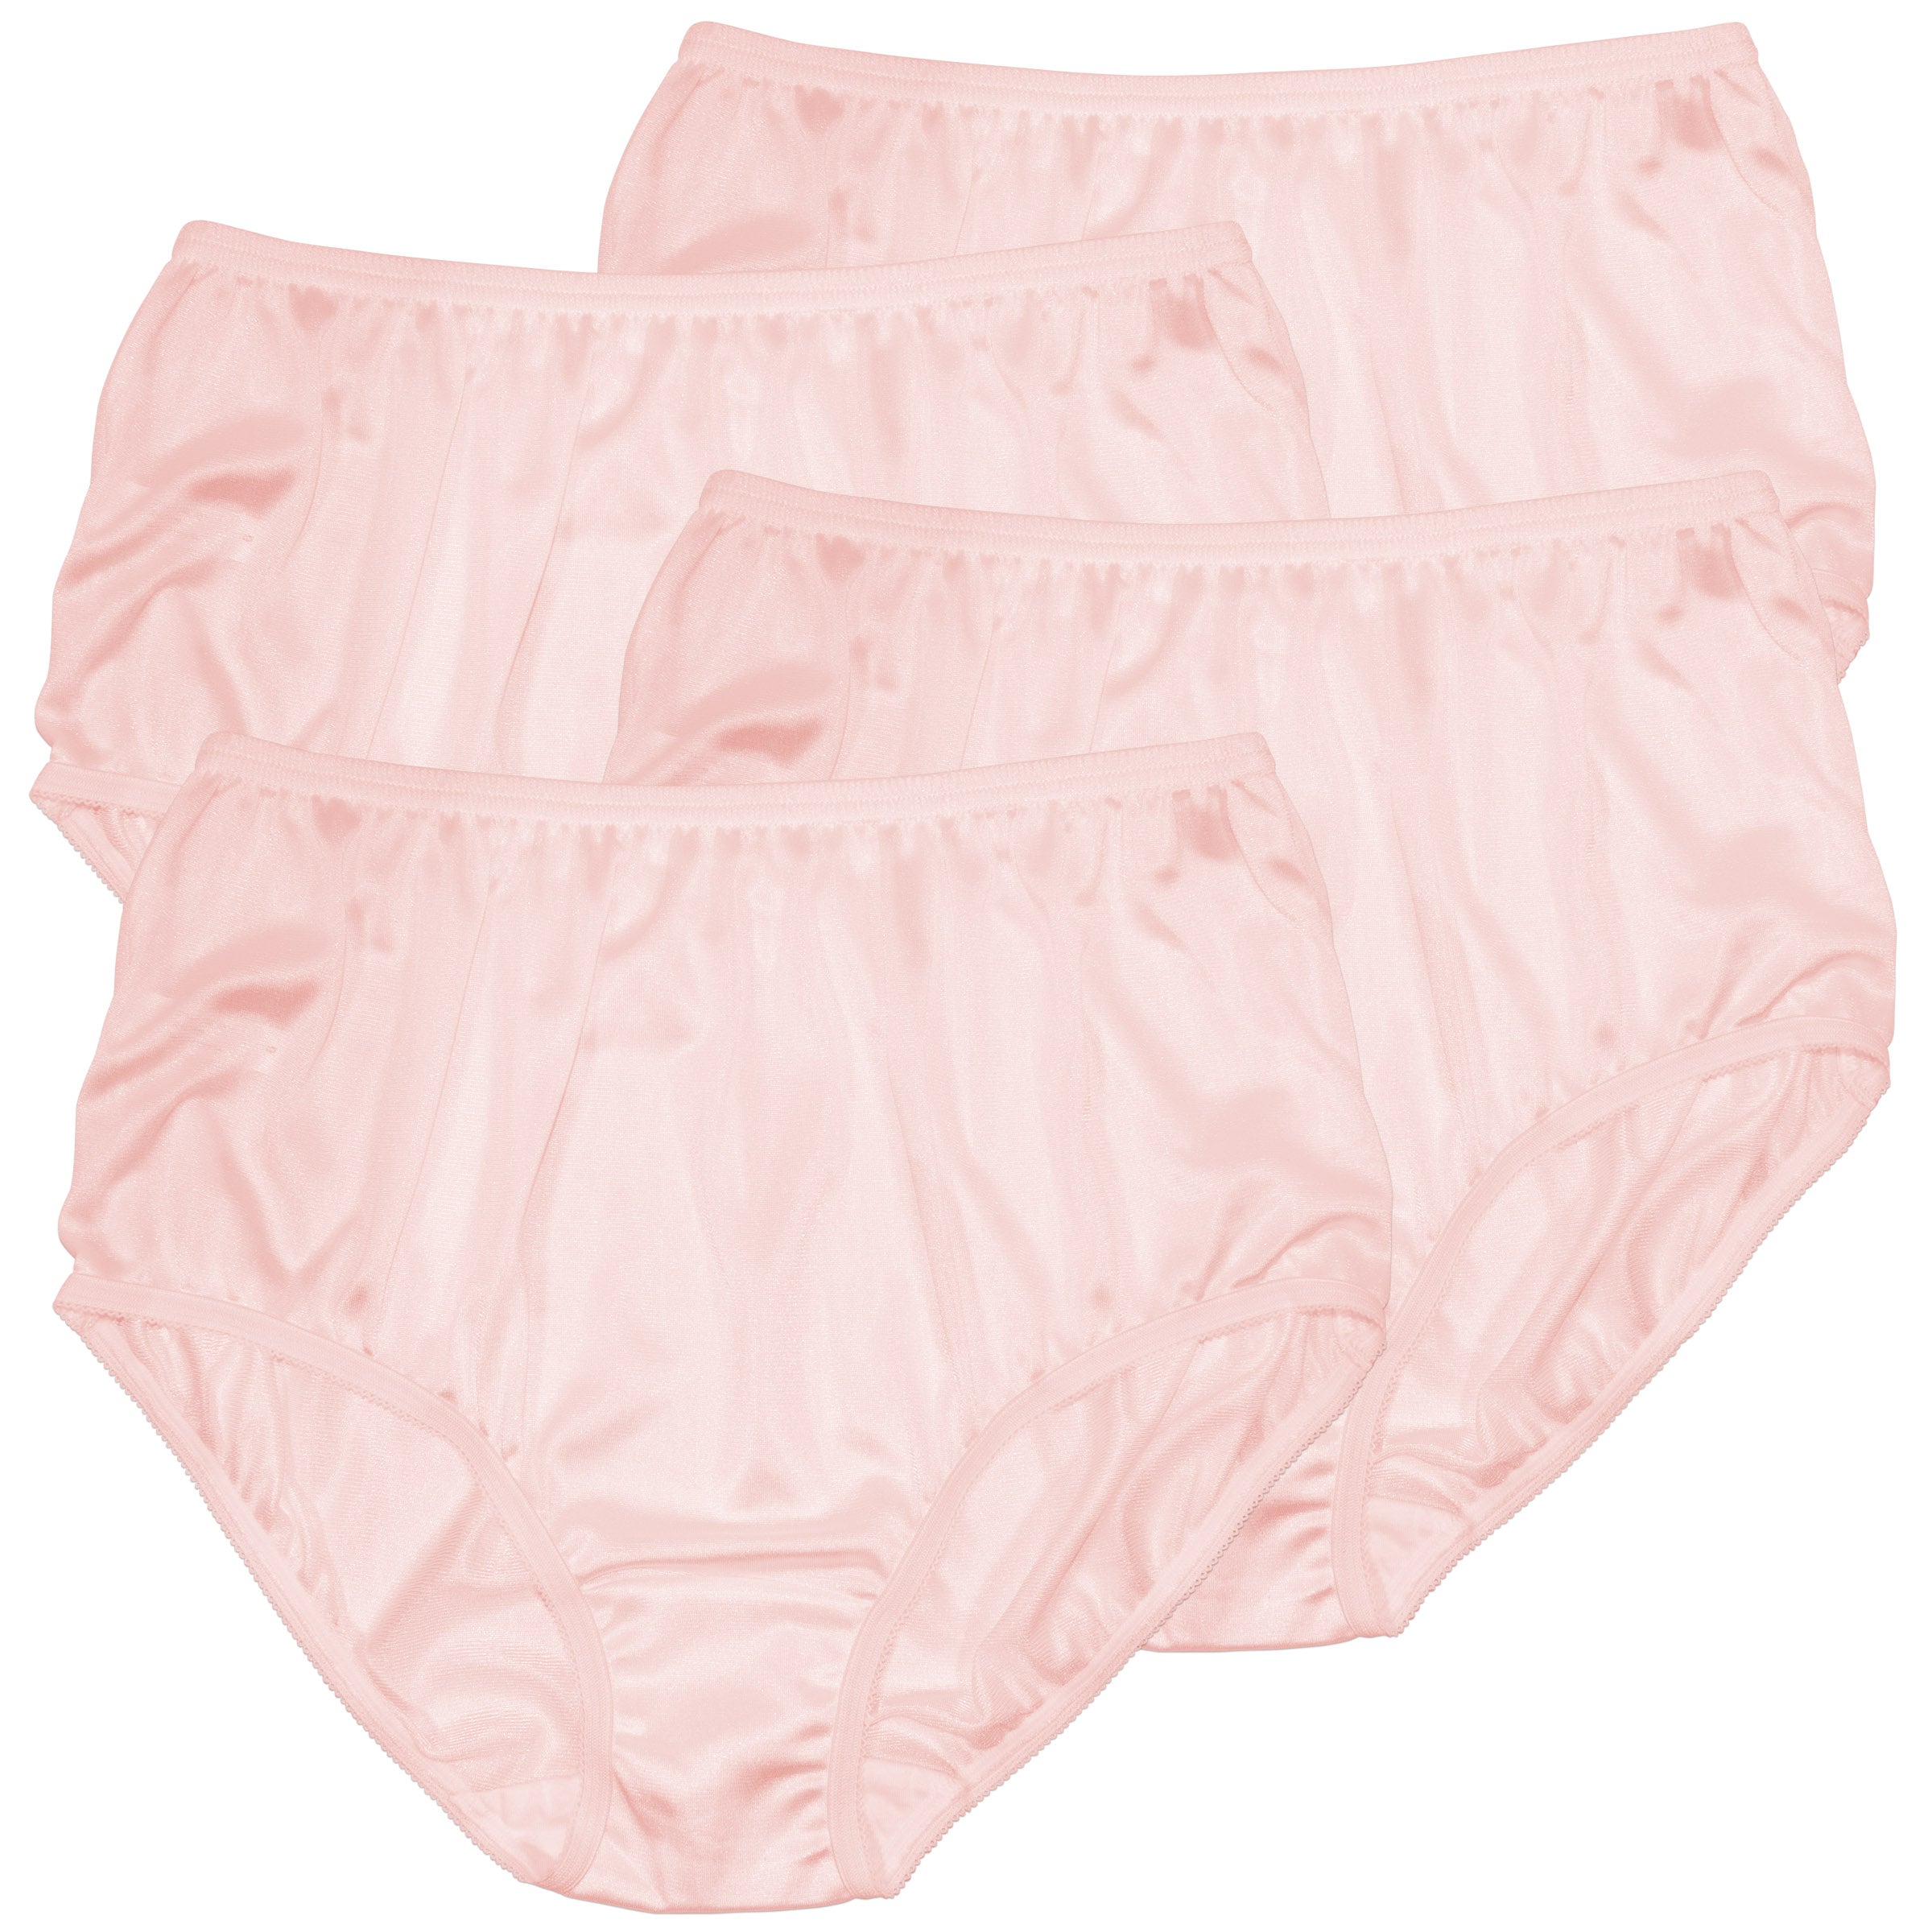 Classic Nylon, Full Coverage Brief Panty Pink 4 Pack (Plain Jane)